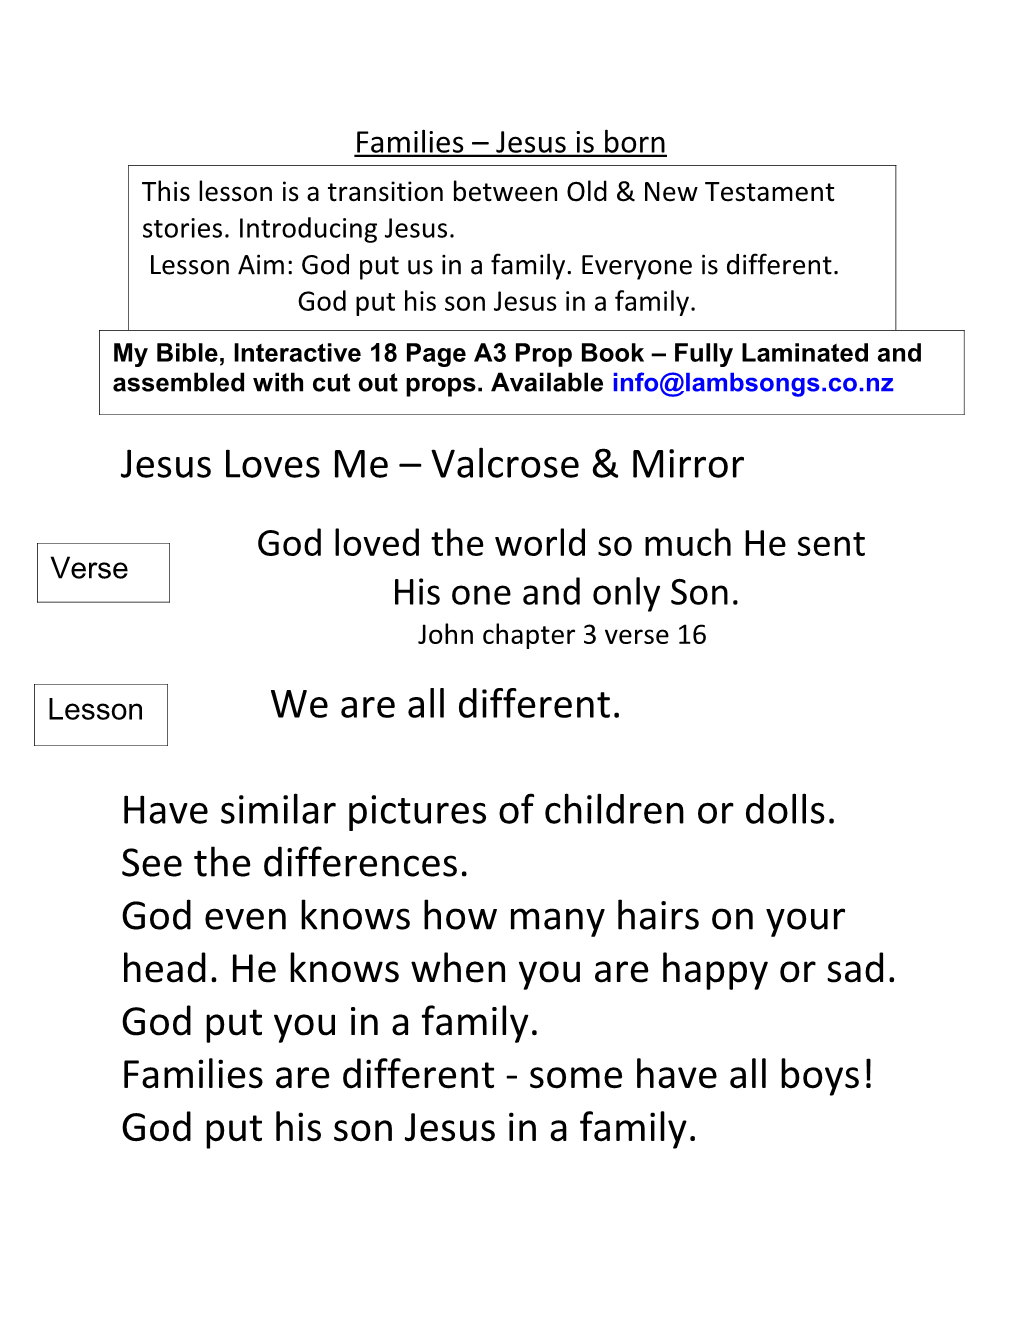 Jesus Loves Me Valcrose & Mirror